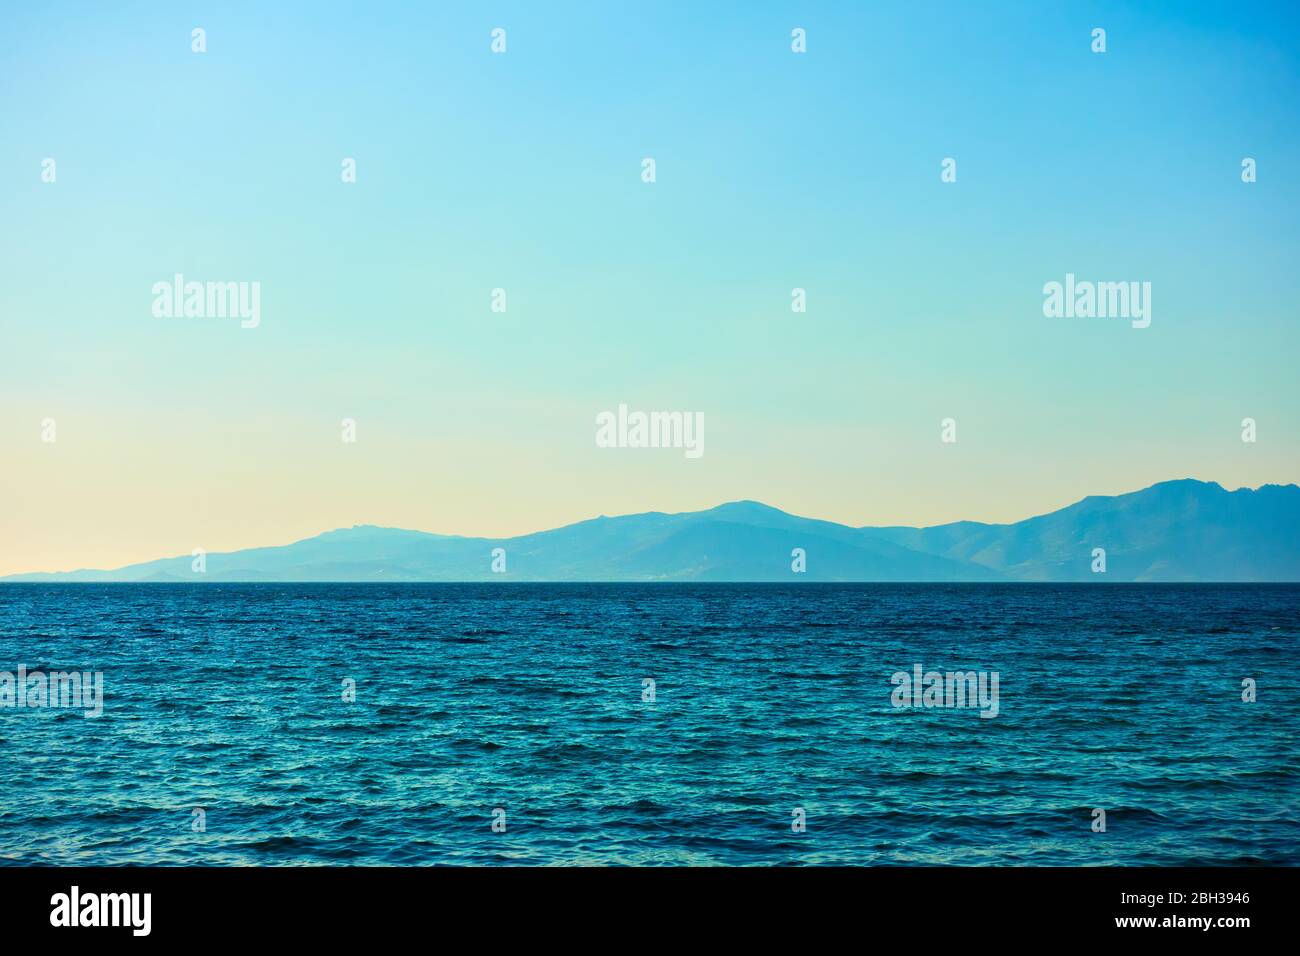 Ägäis und Tinos Insel am Horizont, Griechenland. Griechische Landschaft - Seenlandschaft Stockfoto